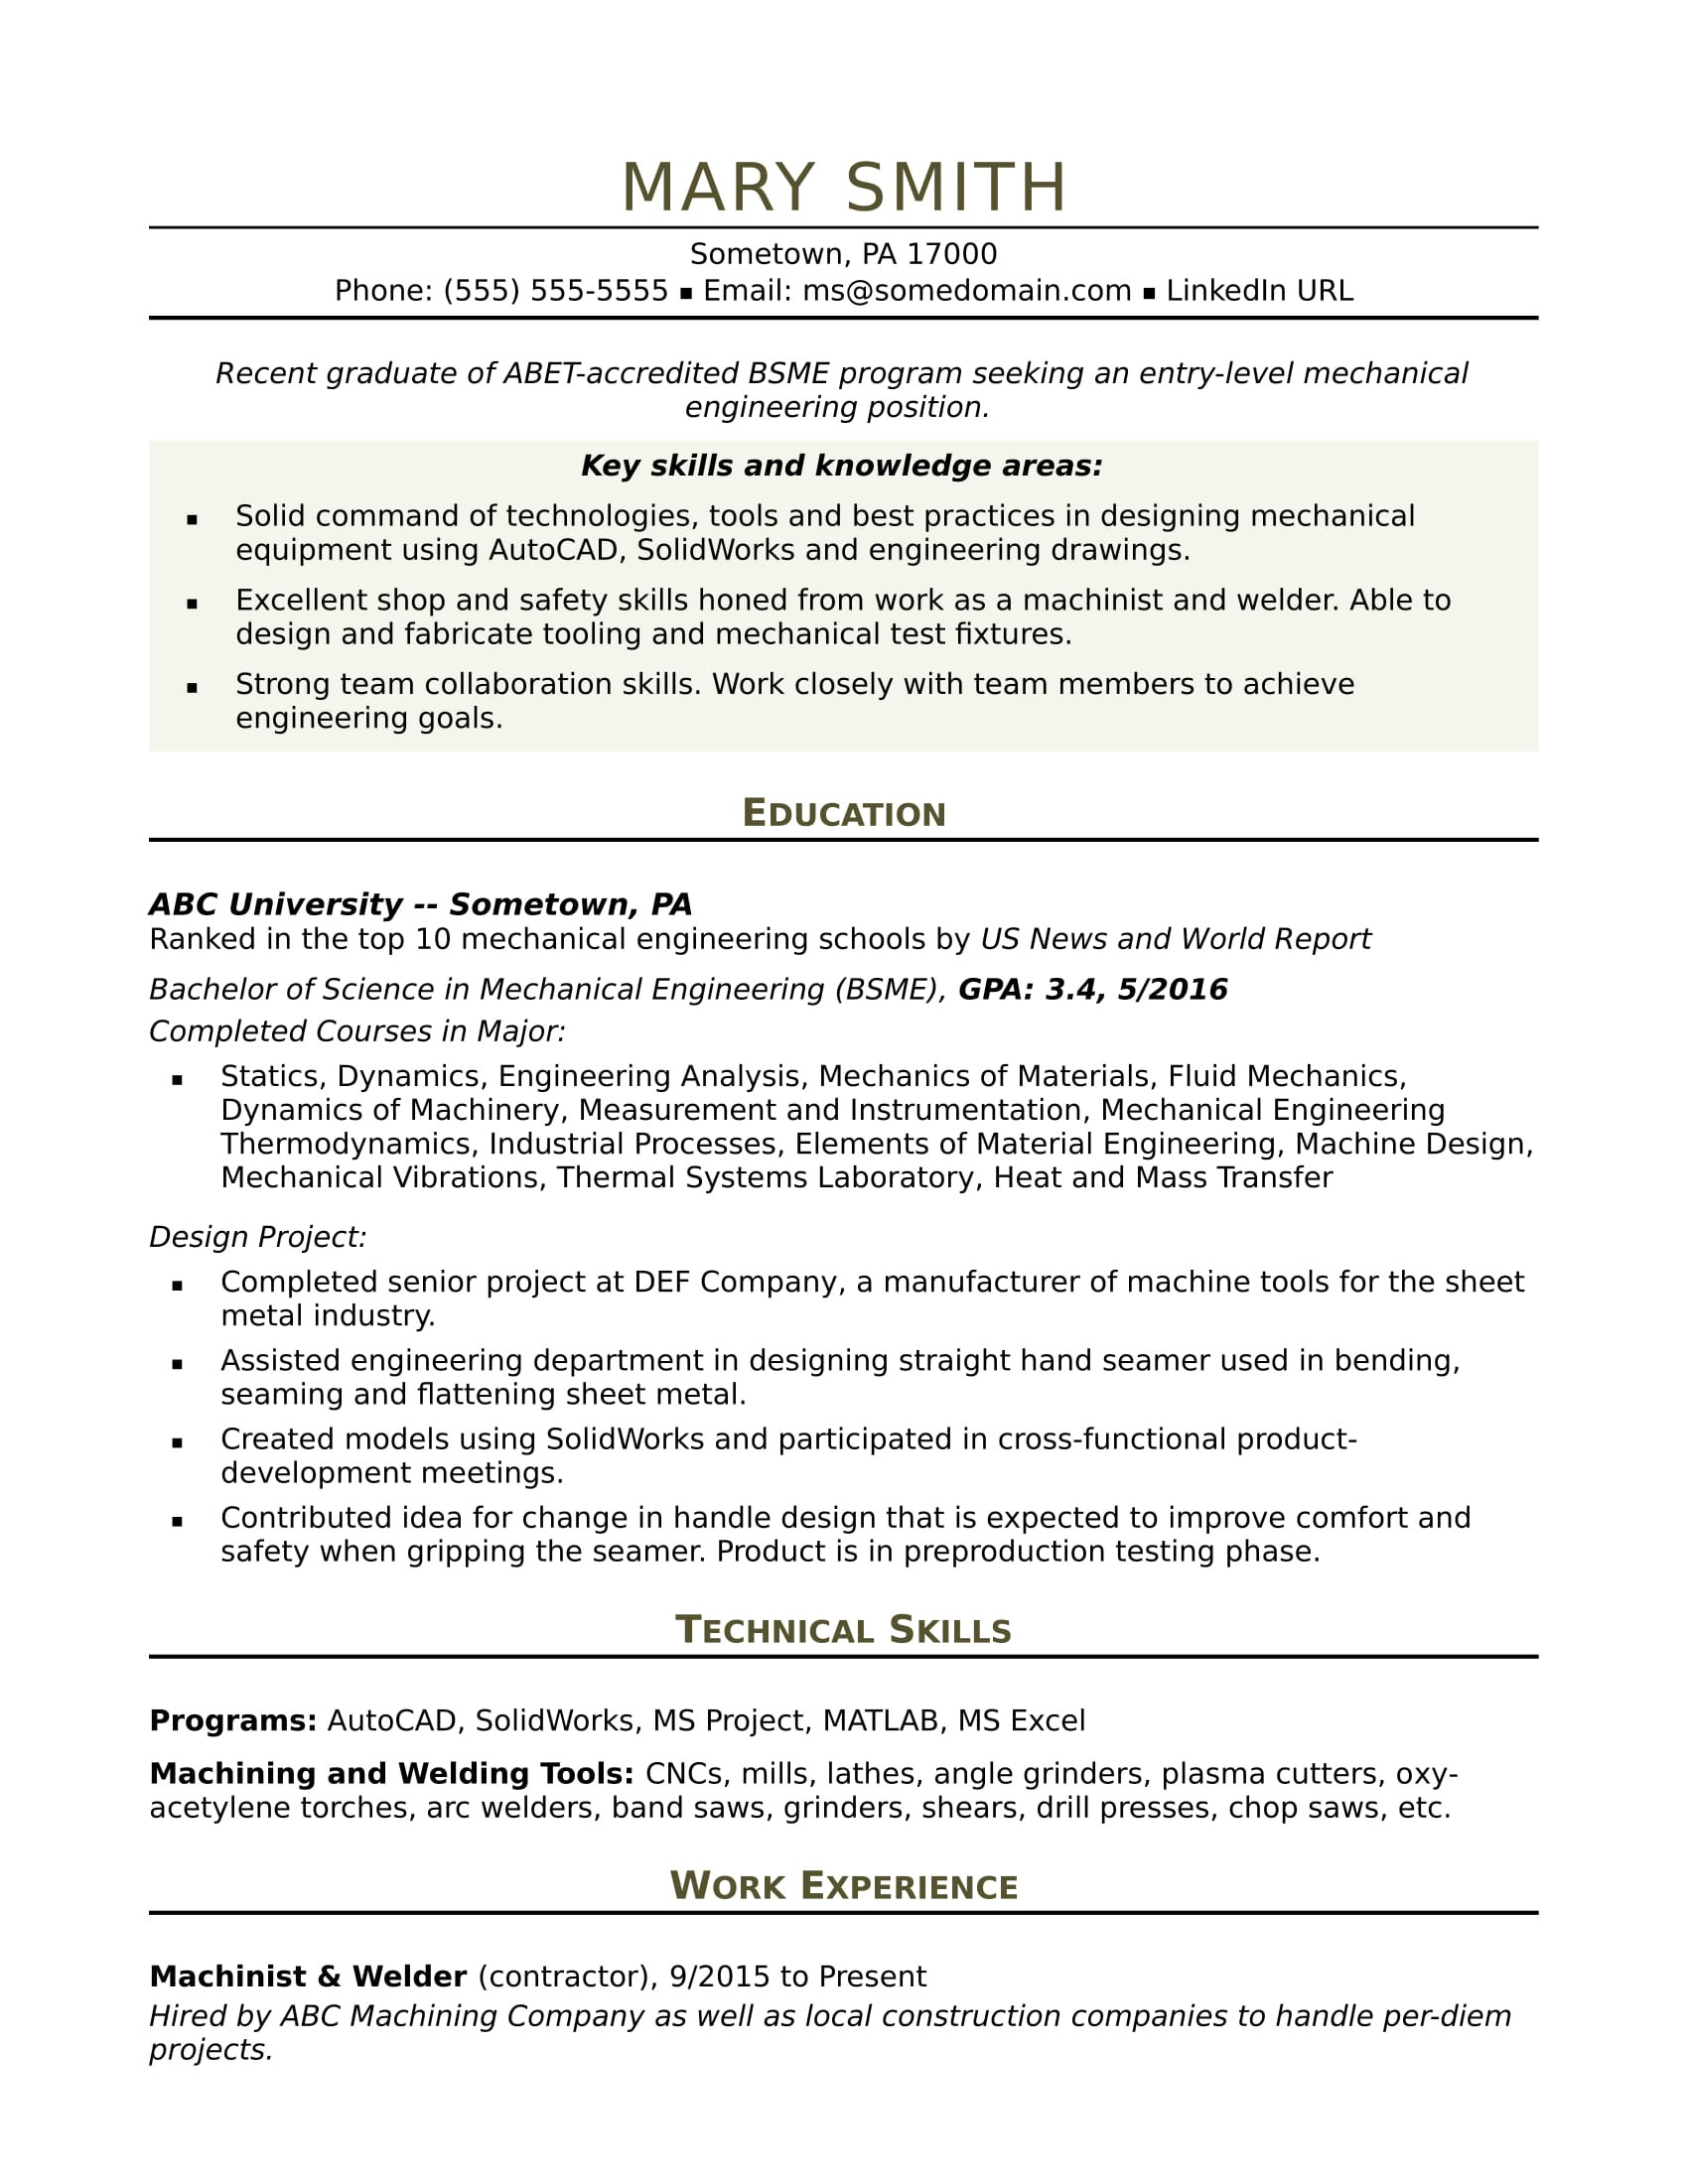 Mechanical Engineering Fresh Graduate Resume Sample Mechanical Engineer Resume: Entry-level Monster.com